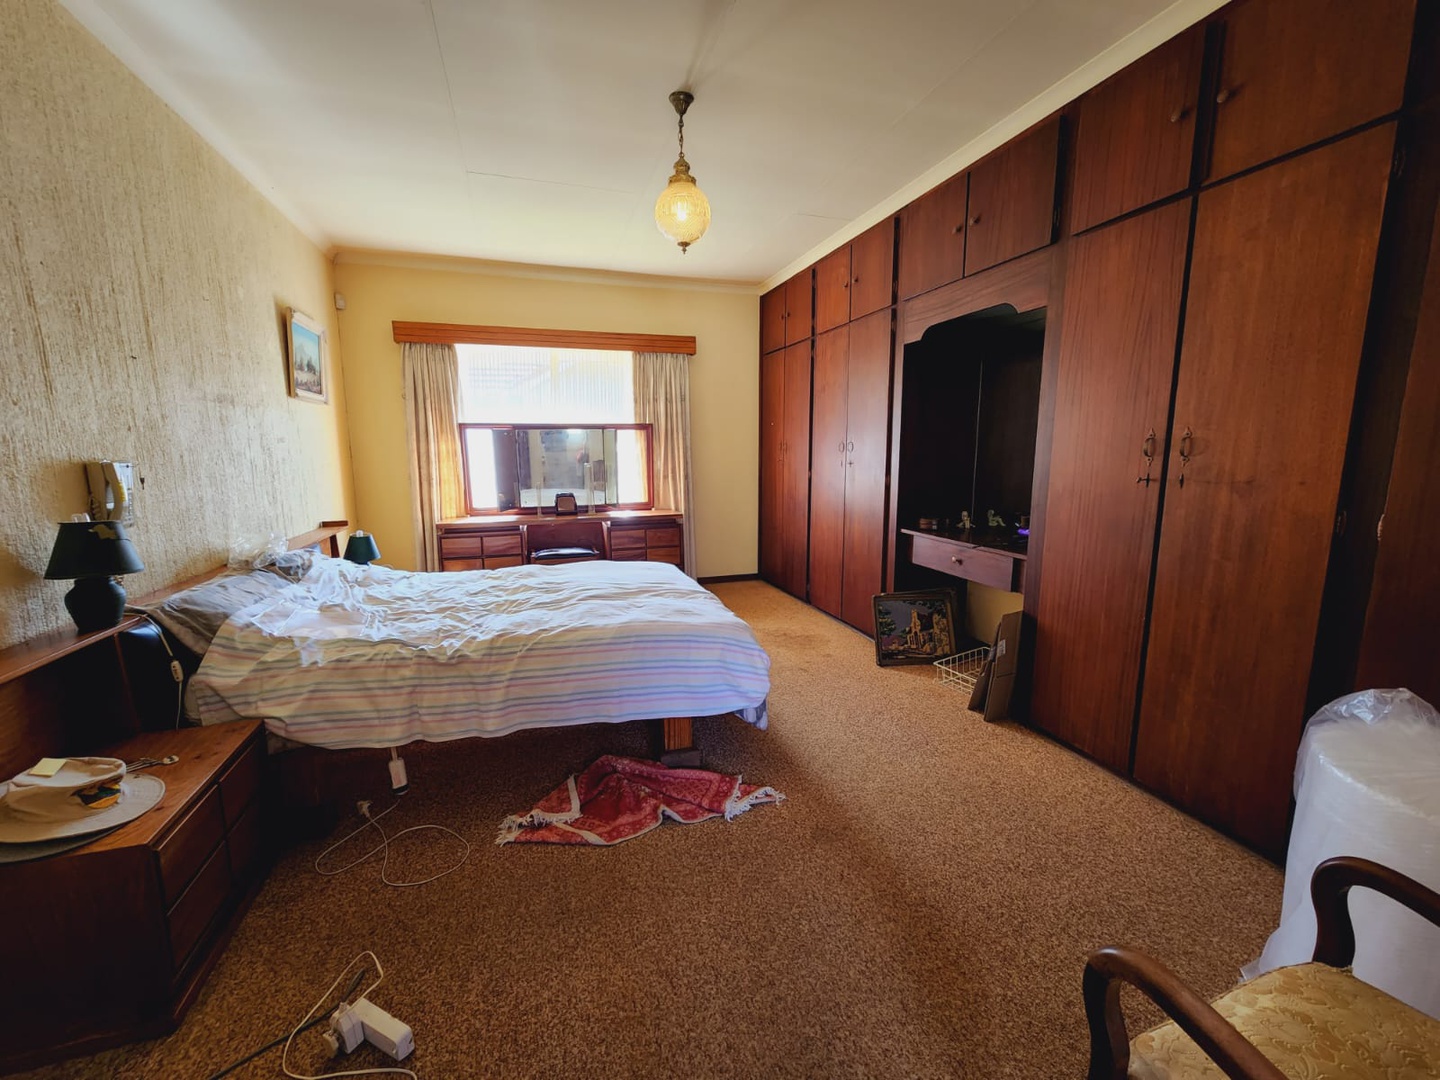 House in Potchefstroom Central - Bedroom 3